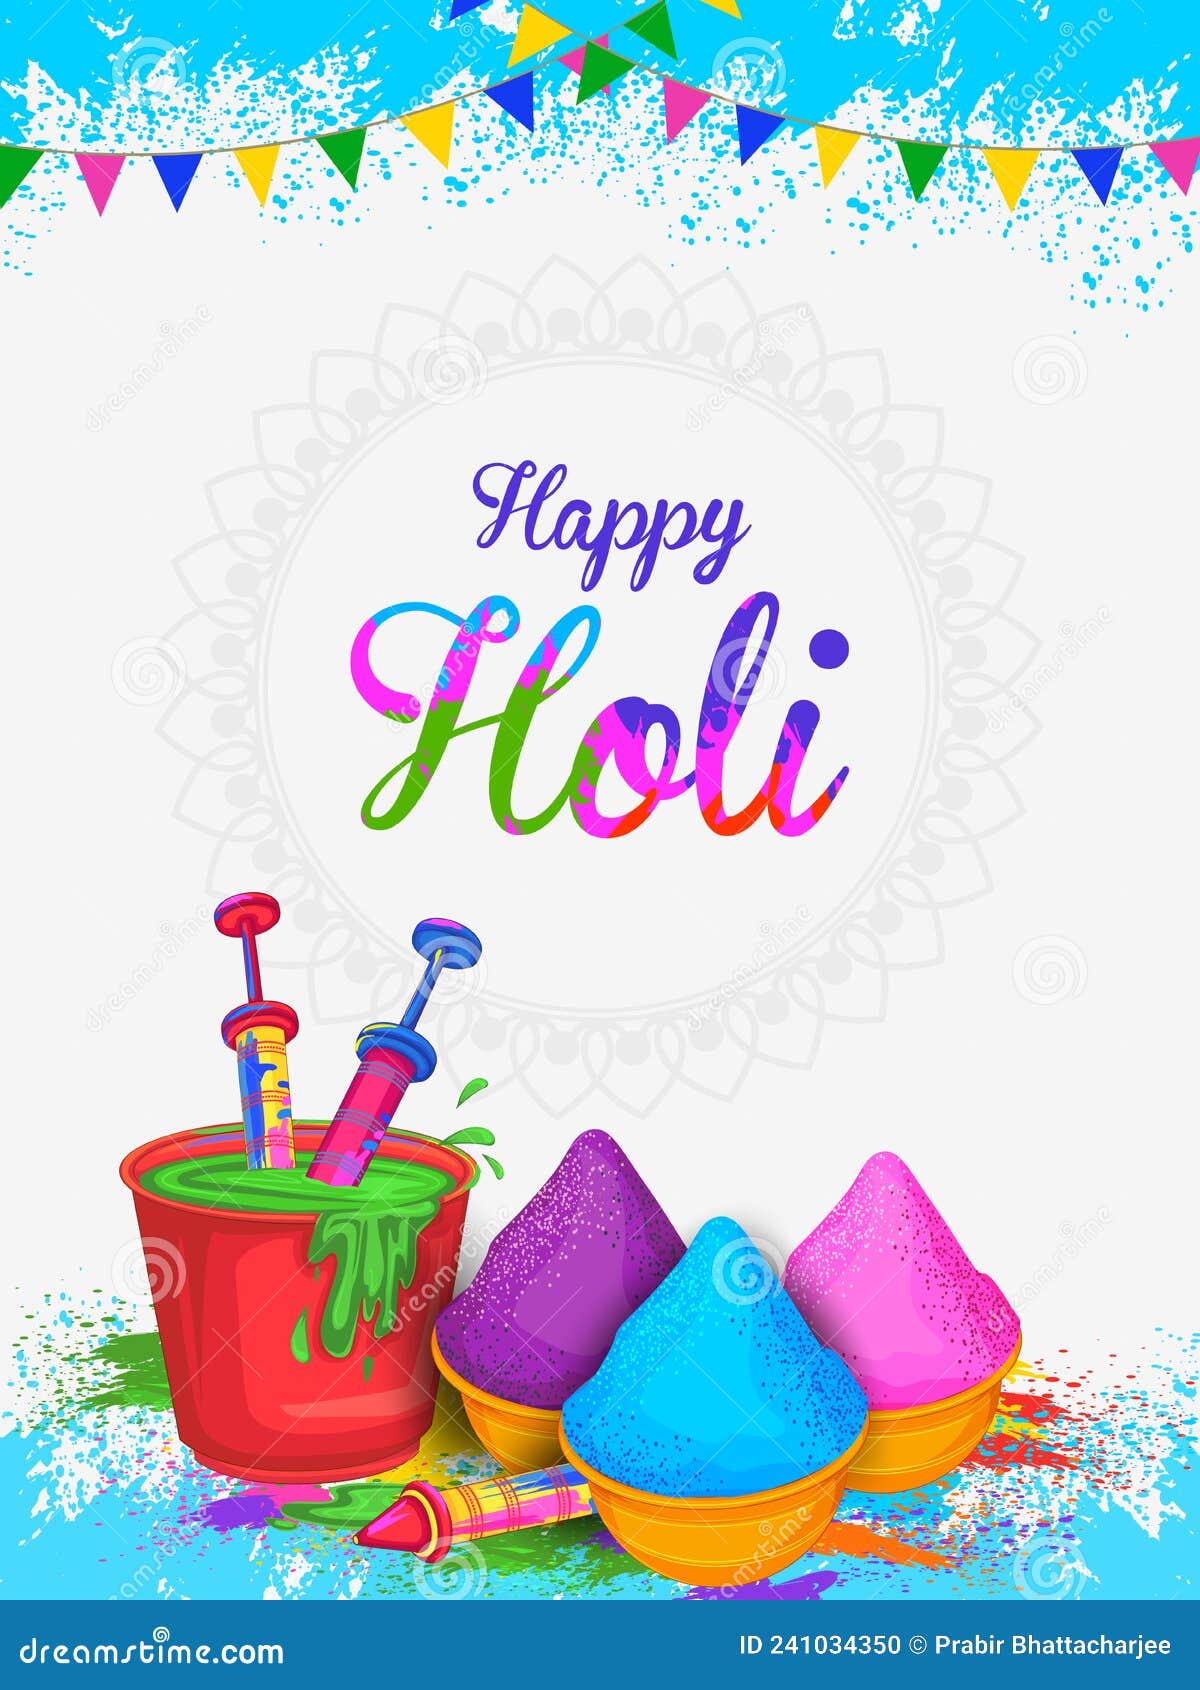 Hd holi editing background  Happy holi editing background  Holi editing  backgrounds